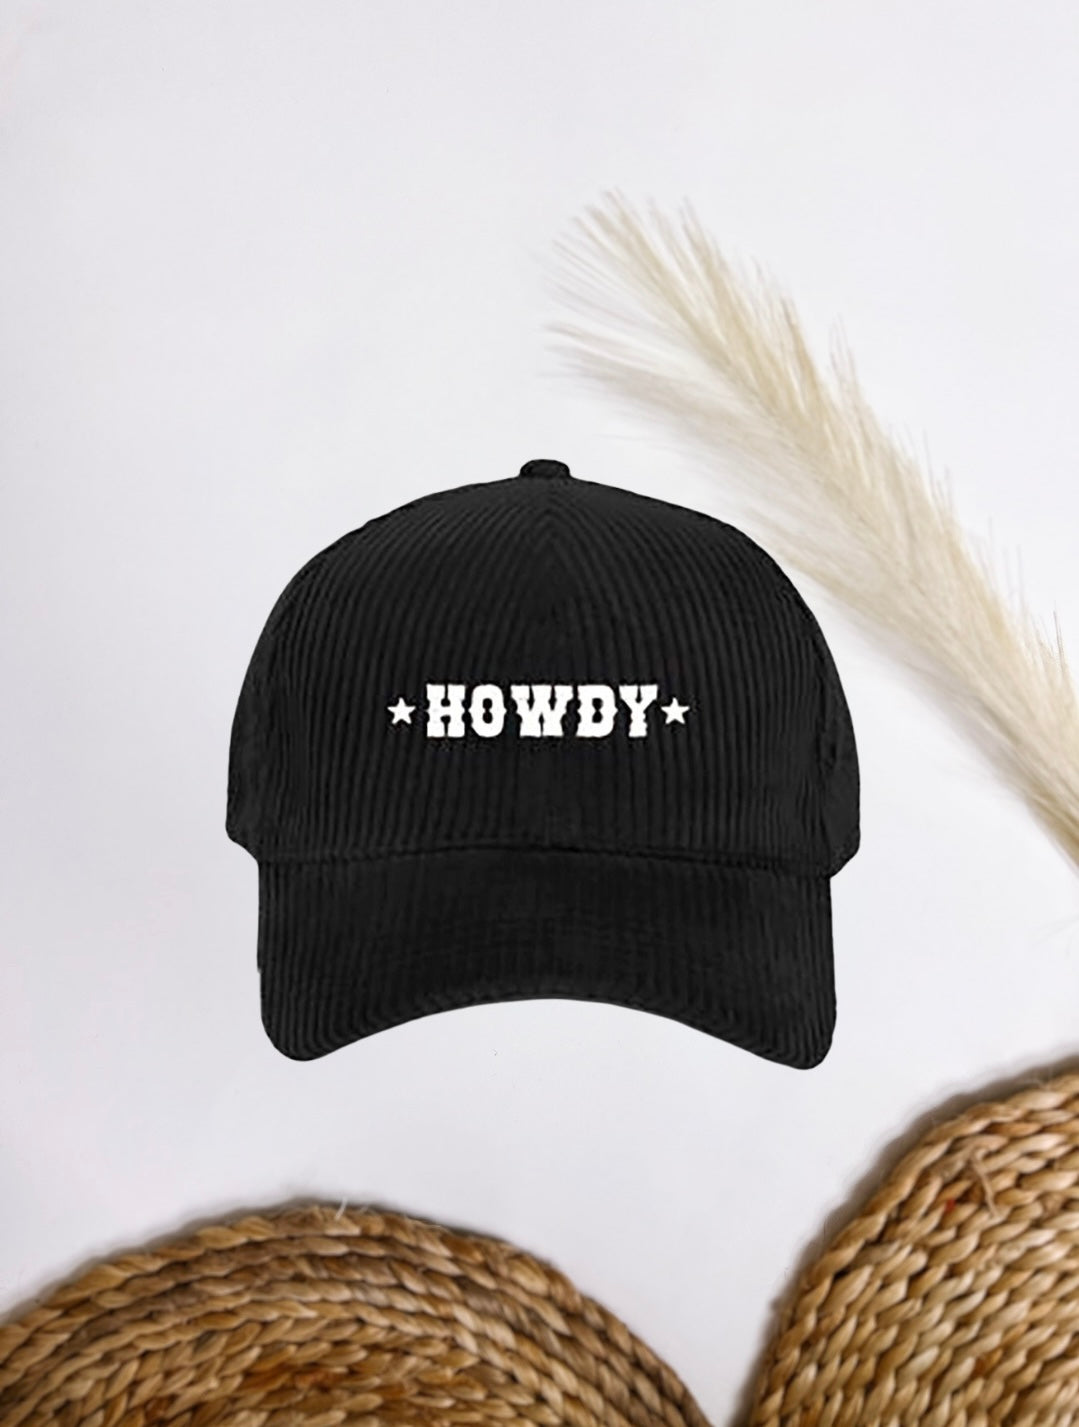 Howdy Black Corduroy Baseball Cap One Size Fits Most Adjustable